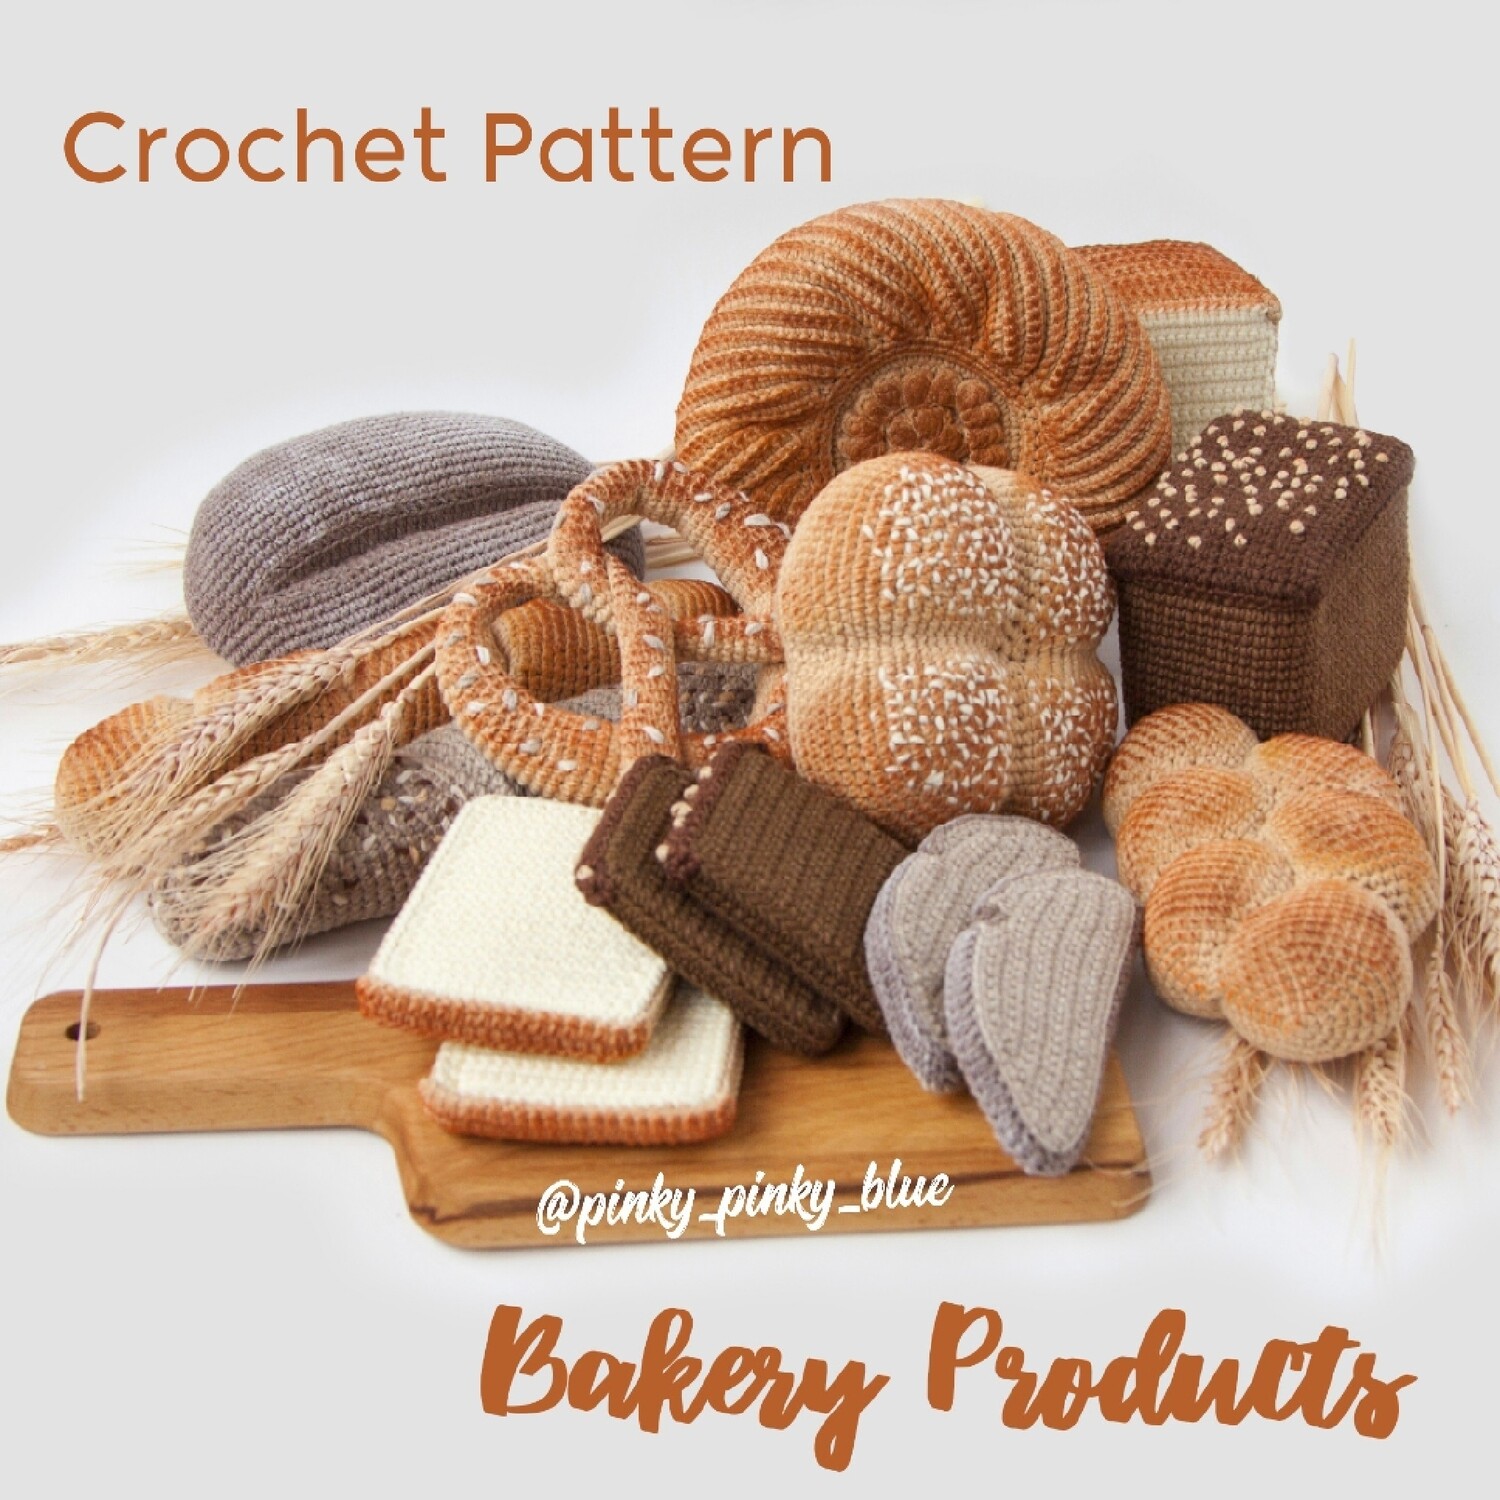 Bakery Products Crochet Pattern